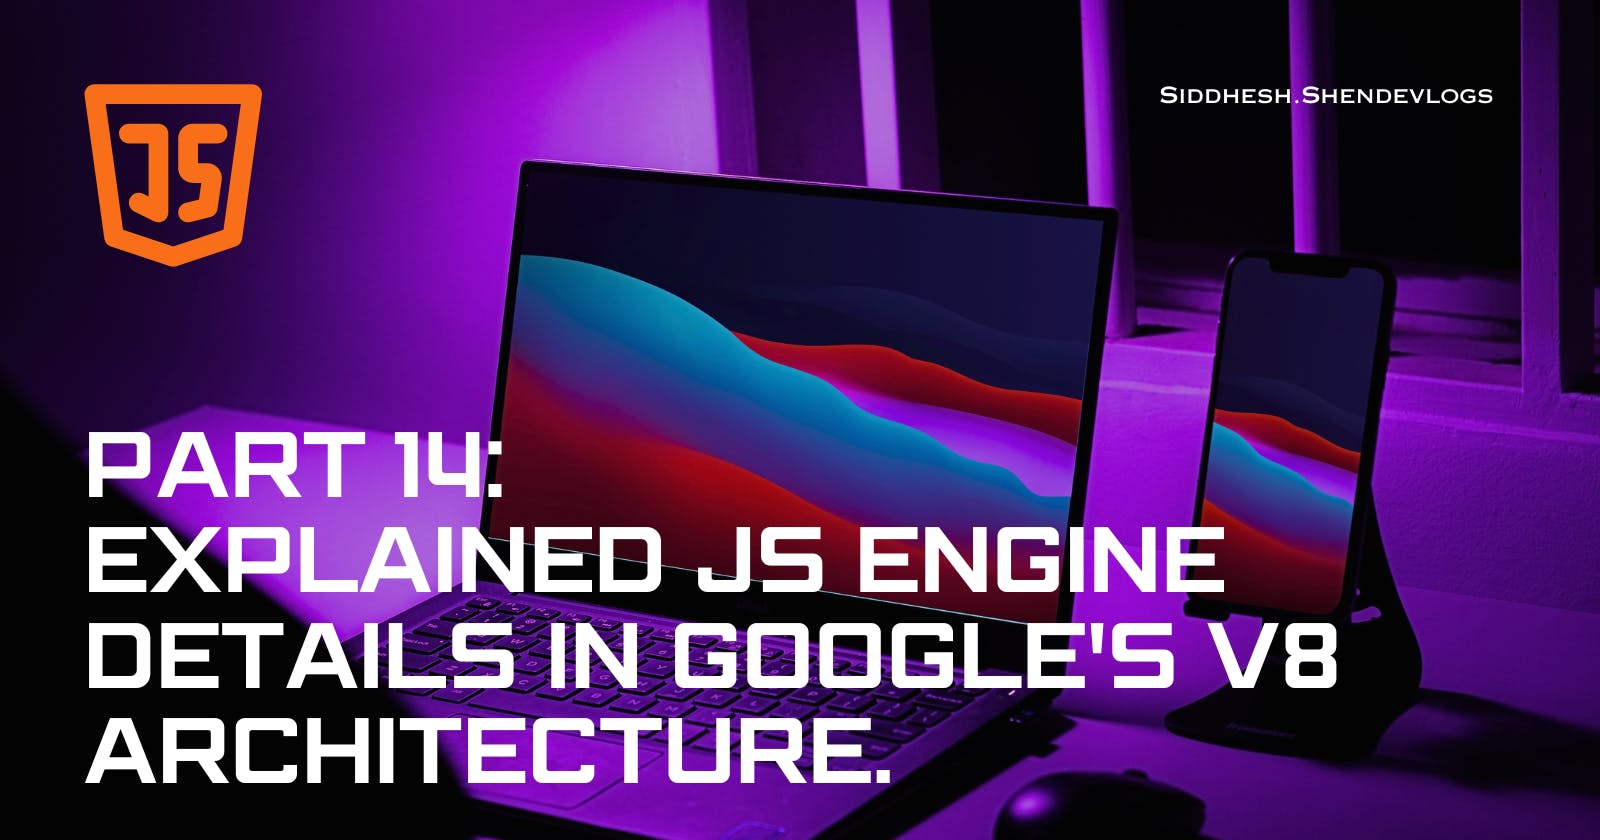 JS Engine Details in Google's V8 Architecture Explained